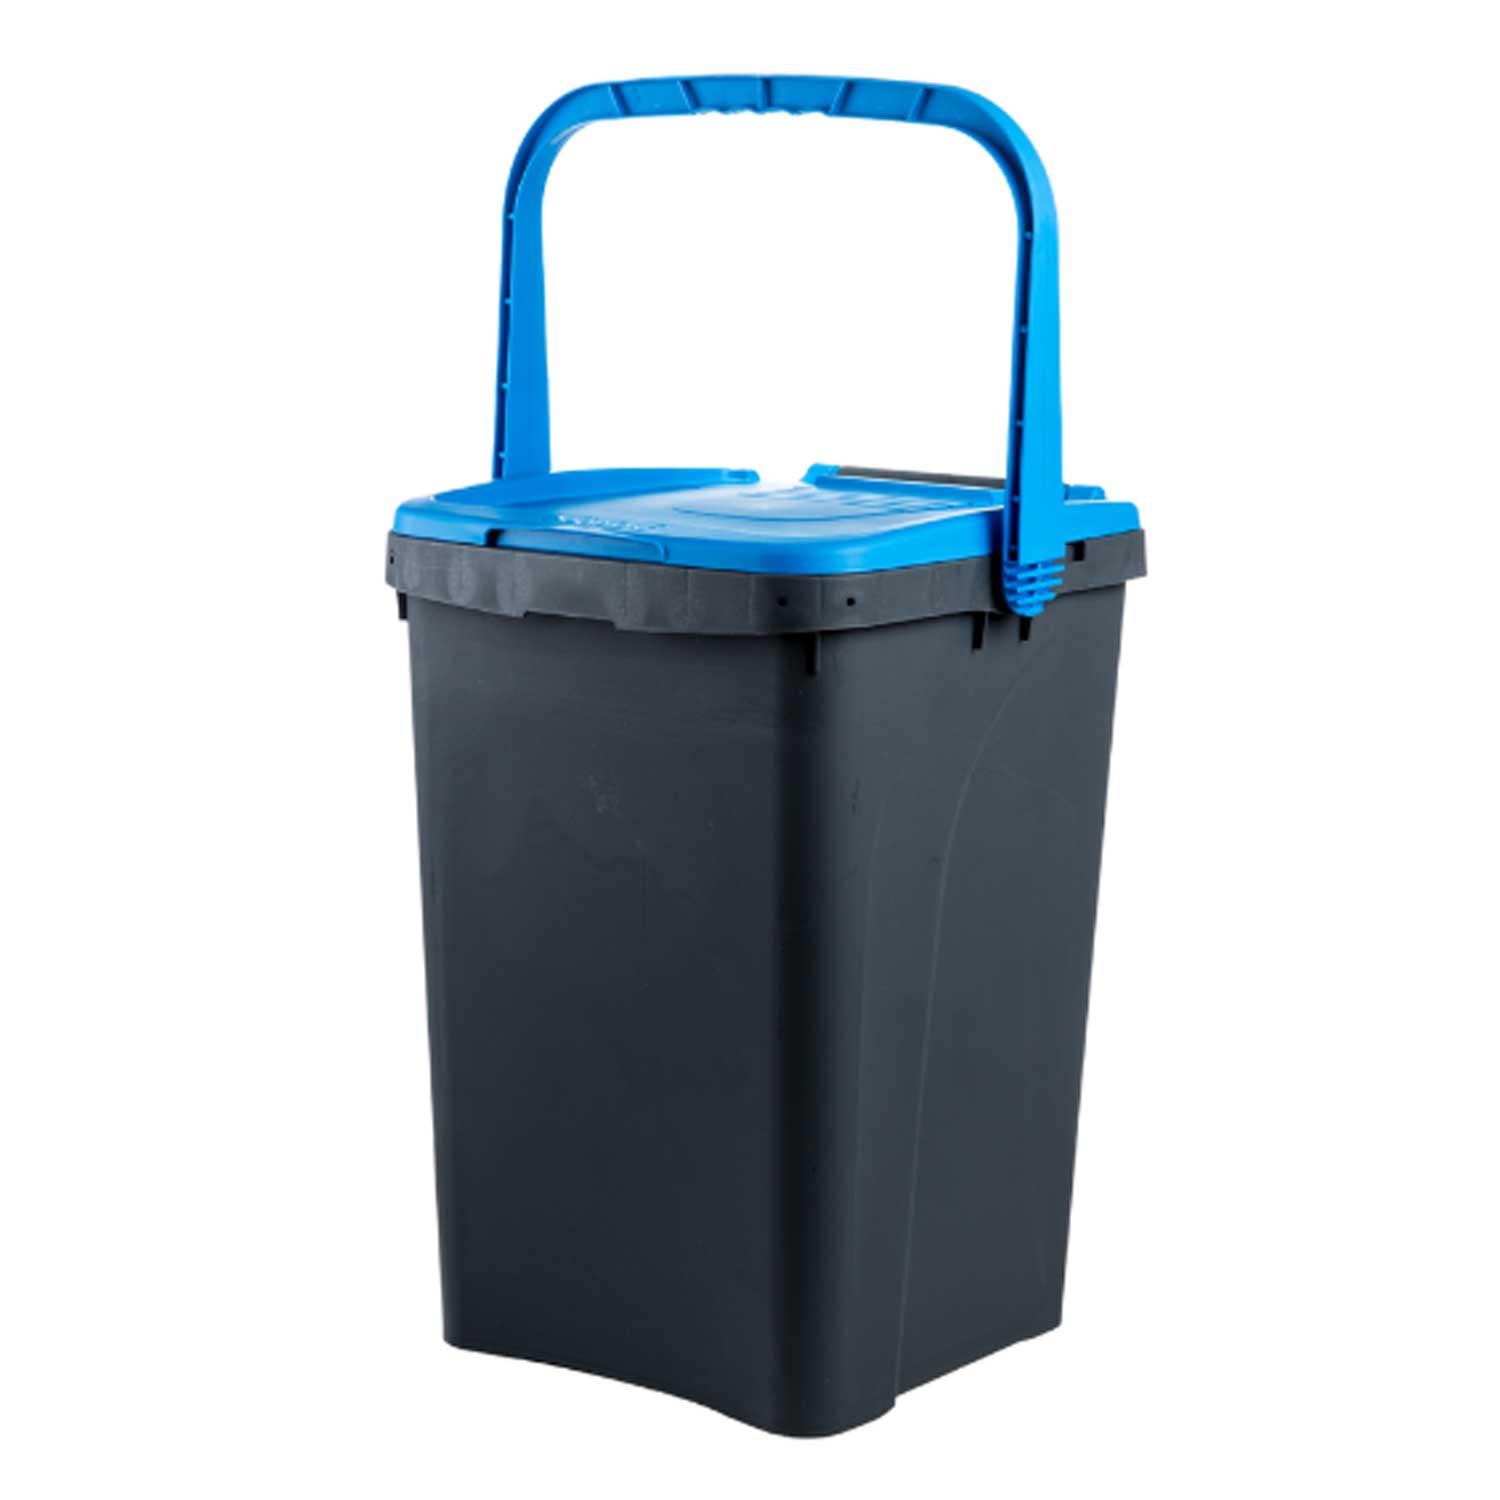 Ecoplast pattumiera per raccolta differenziata 50 lt, bidone spazzatura blu